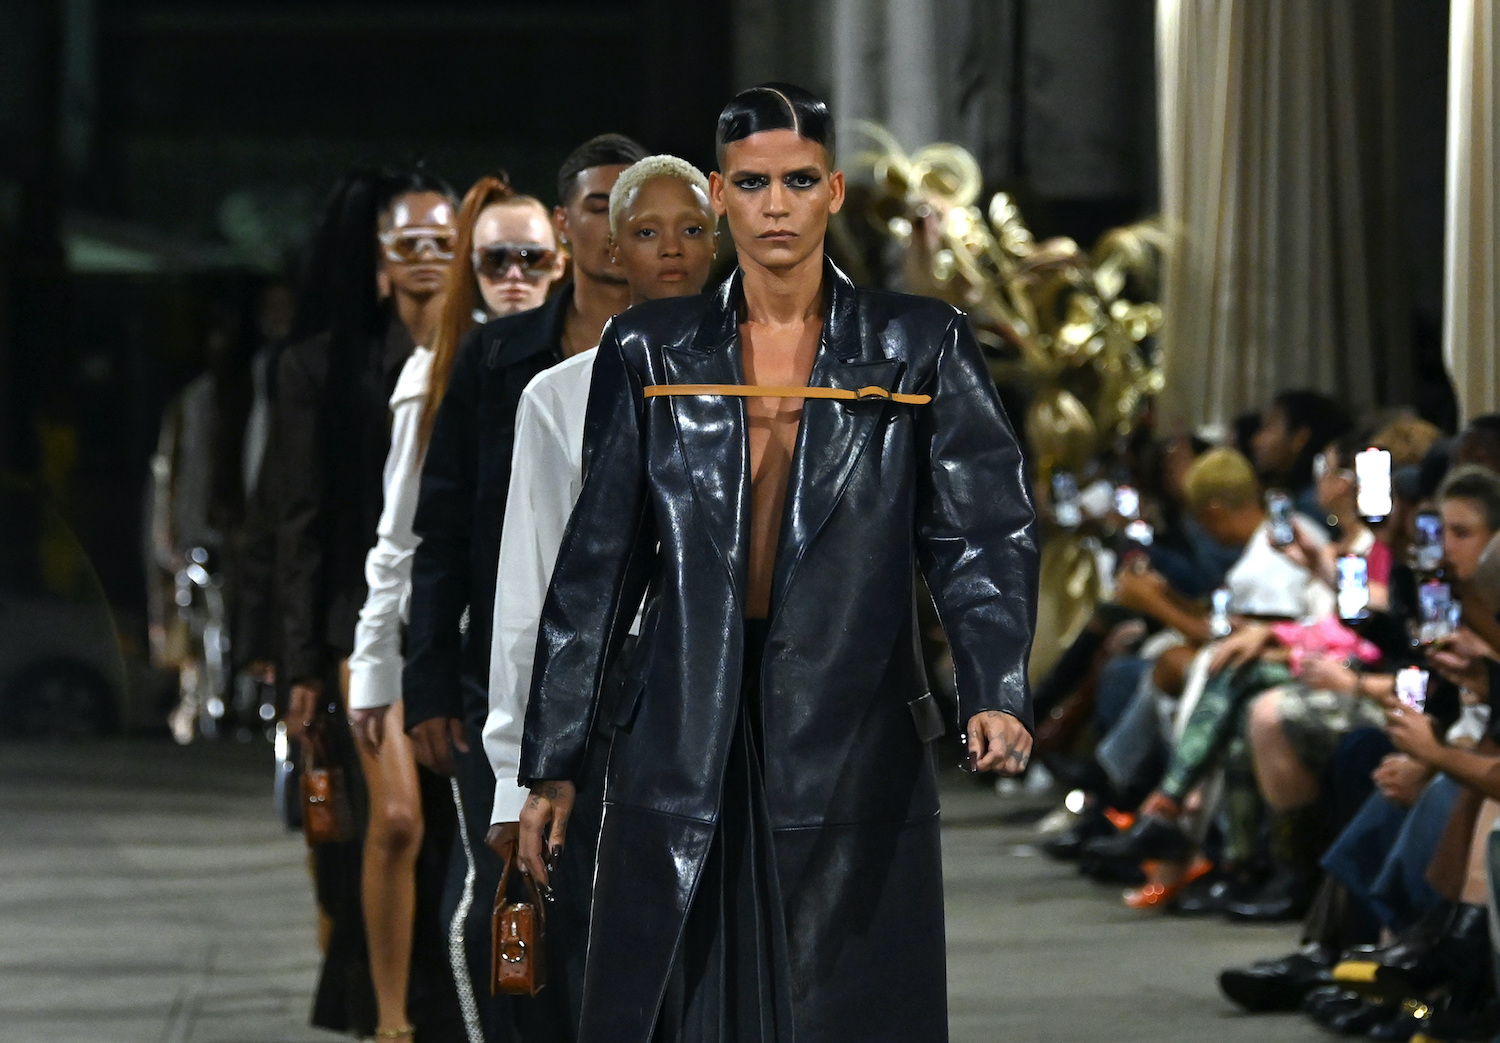 New York Fashion Week 2021 Highlights Luar Raul Lopez